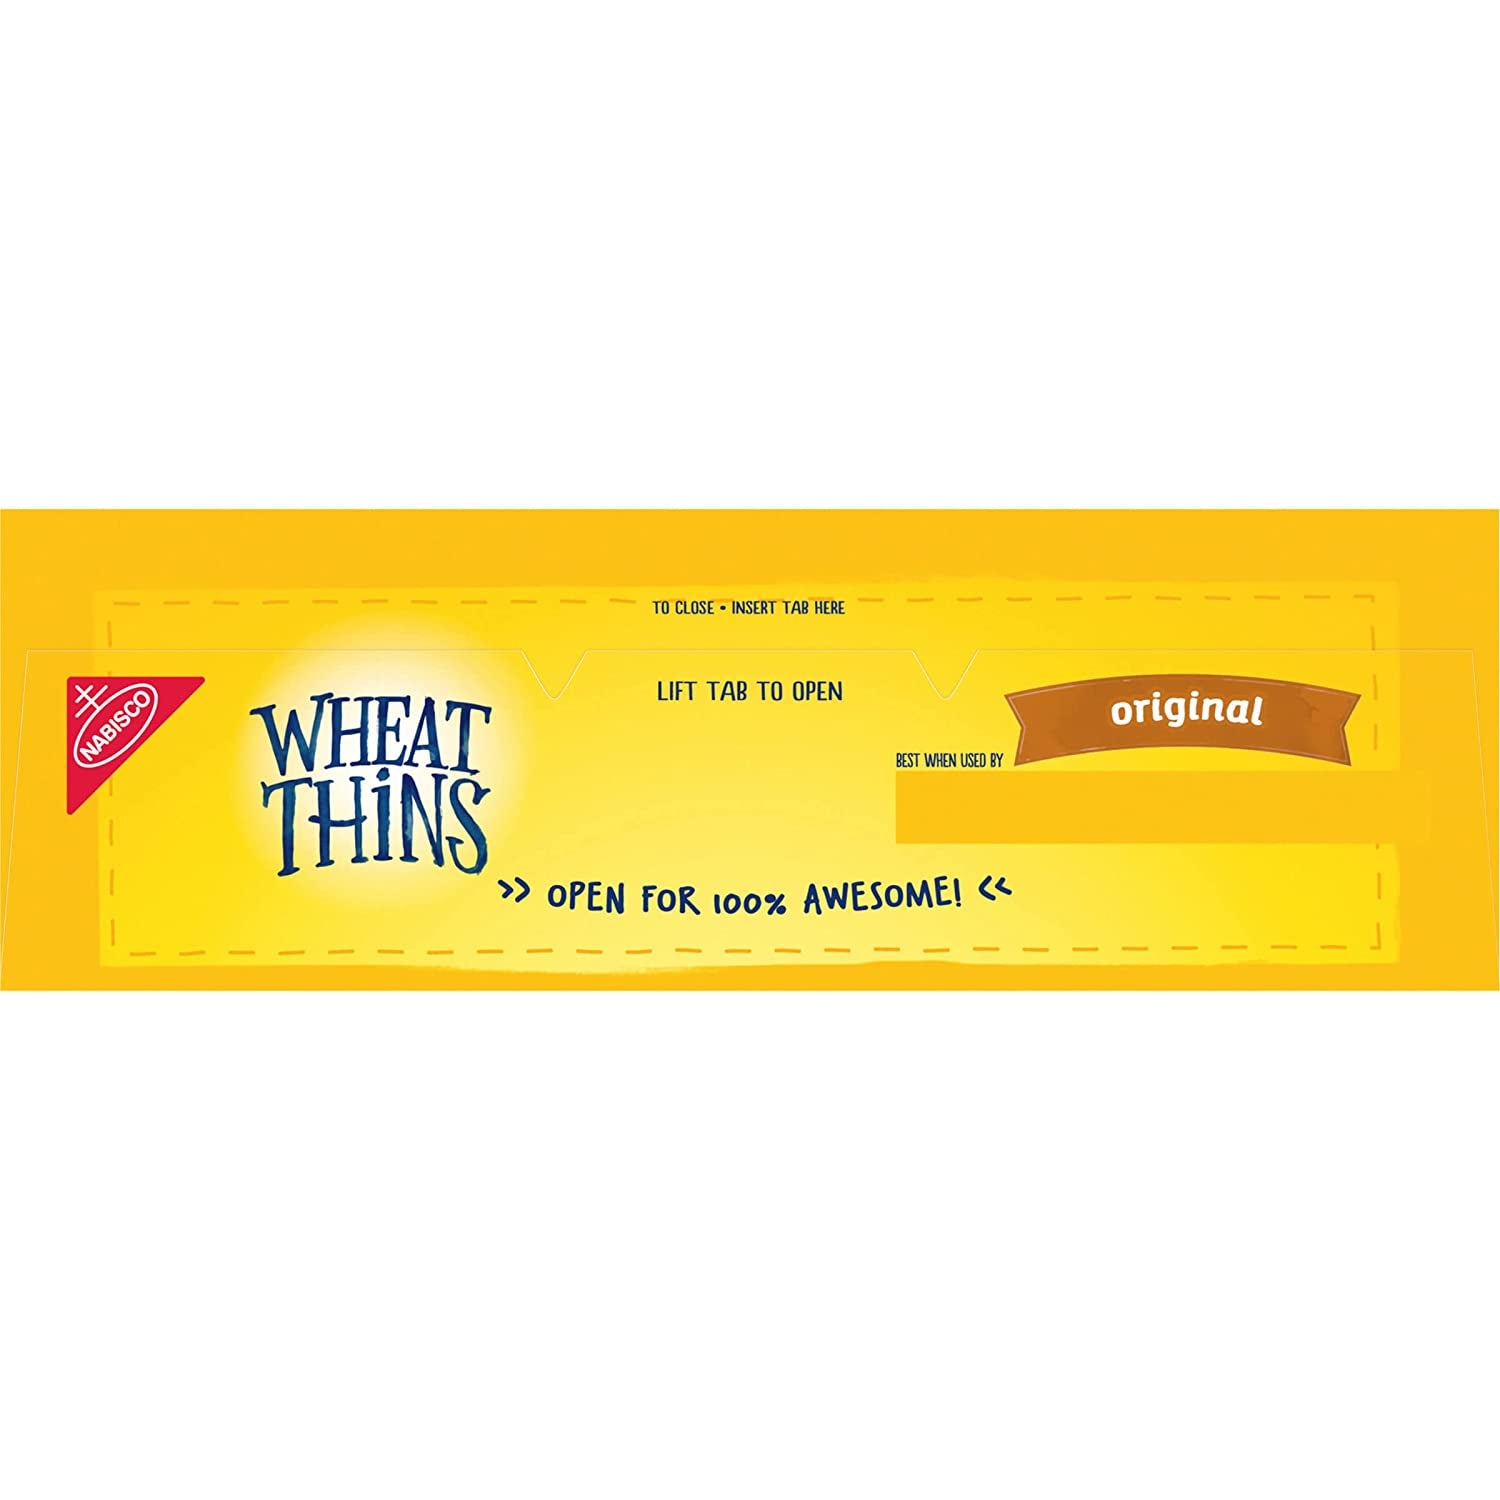 Wheat Thins Original Whole Grain Wheat Crackers, Party Size, 20 Oz Box